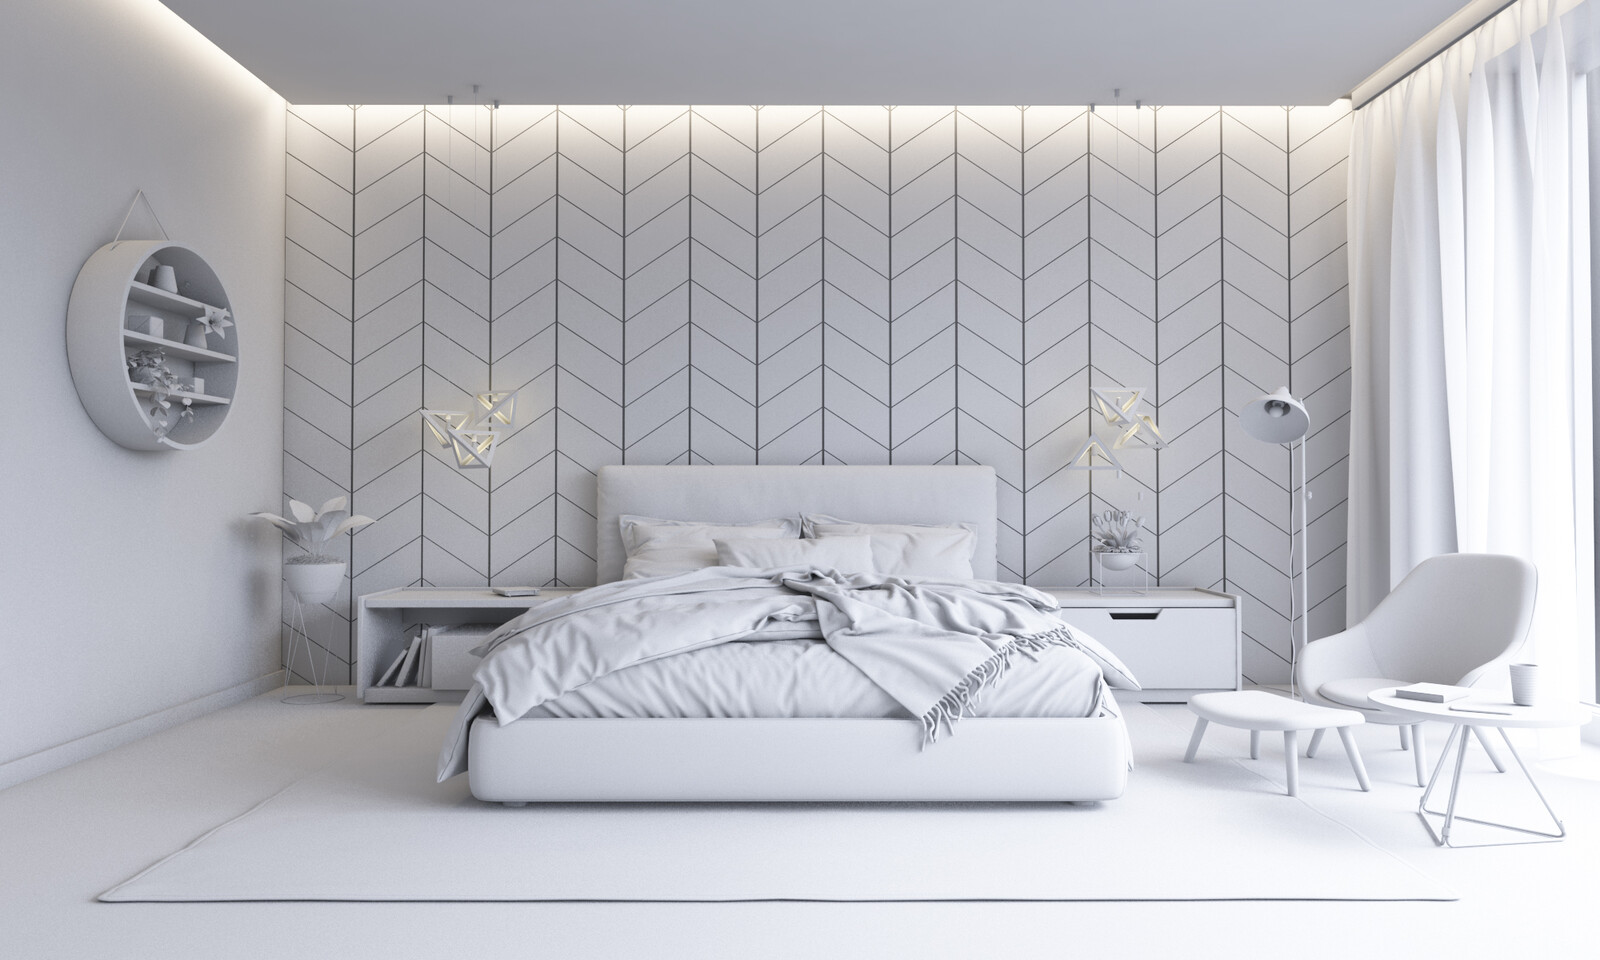 Fidel Branche - Modern Bedroom Interior Design - ArchViz